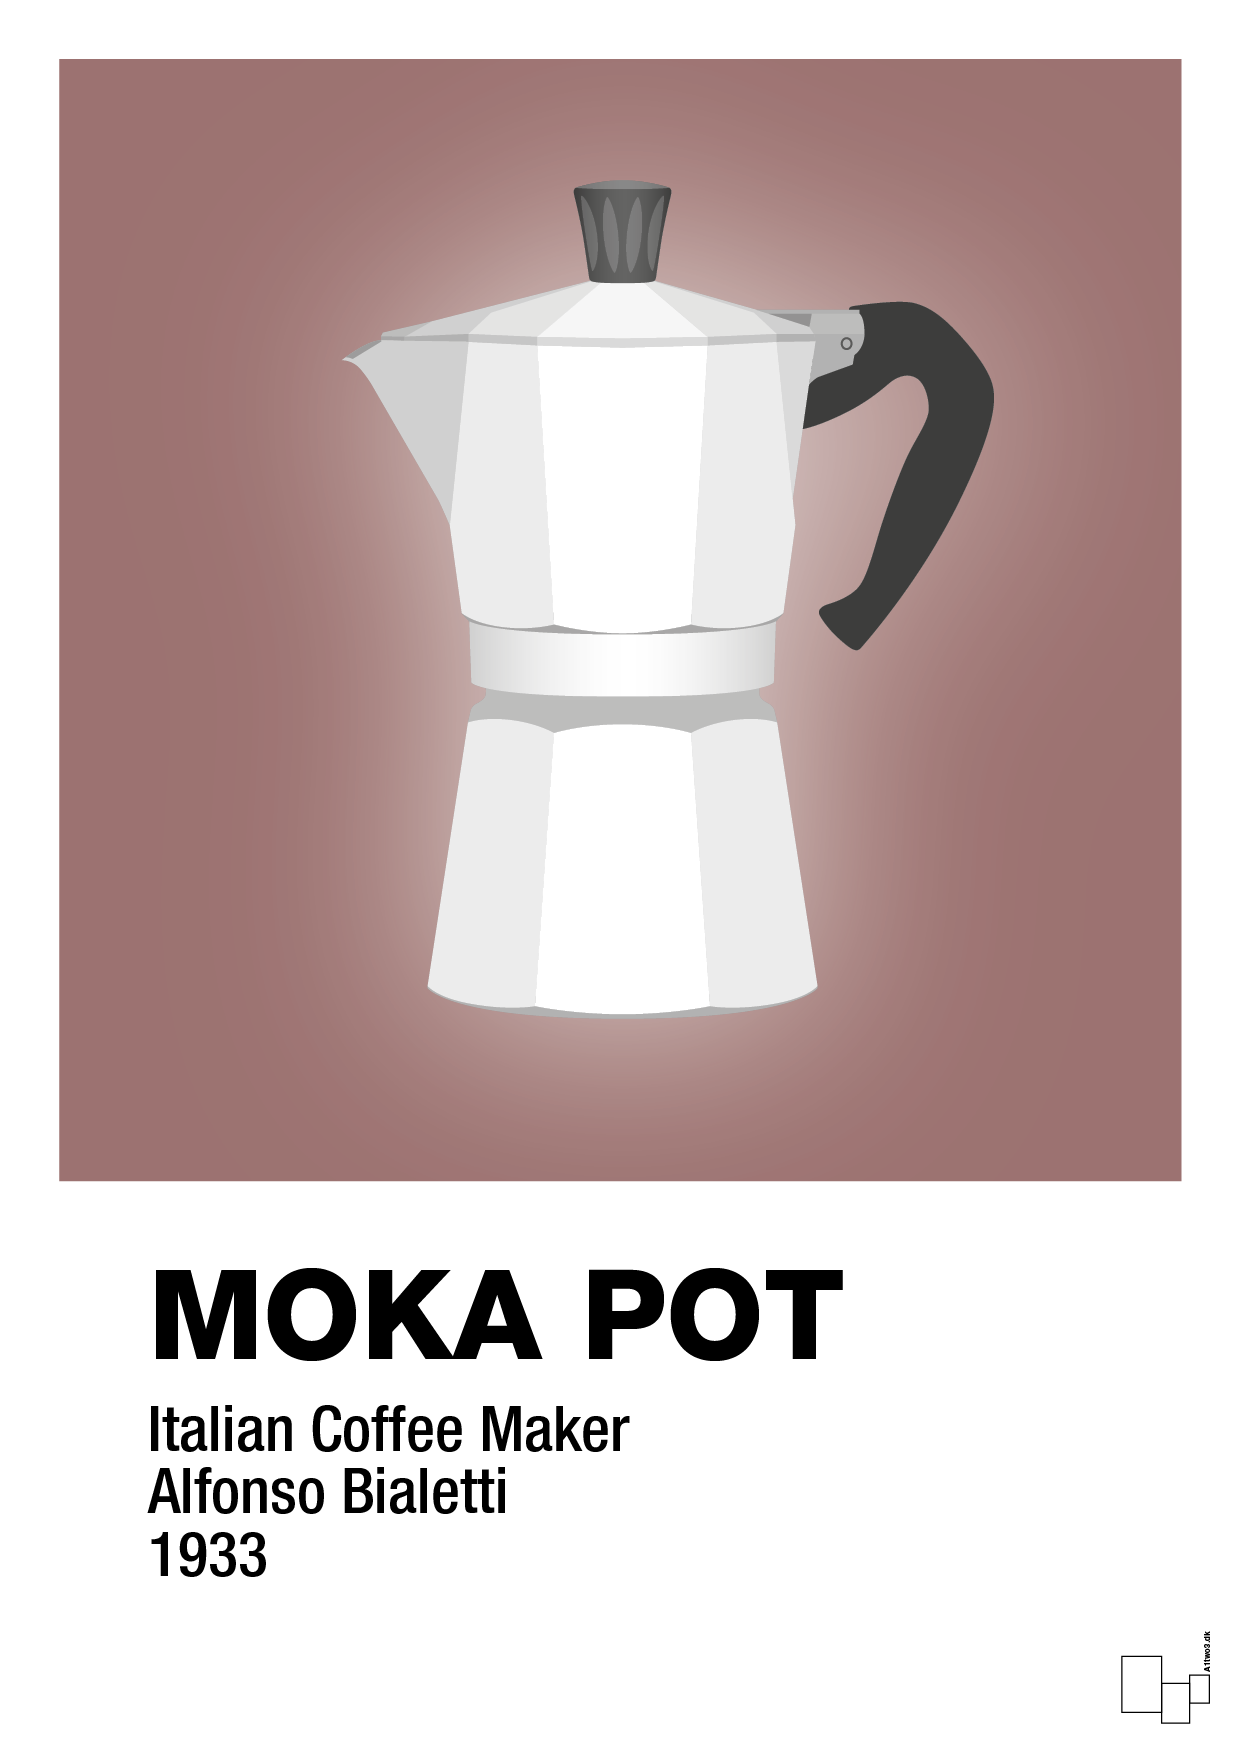 moka pot - Plakat med Mad & Drikke i Plum